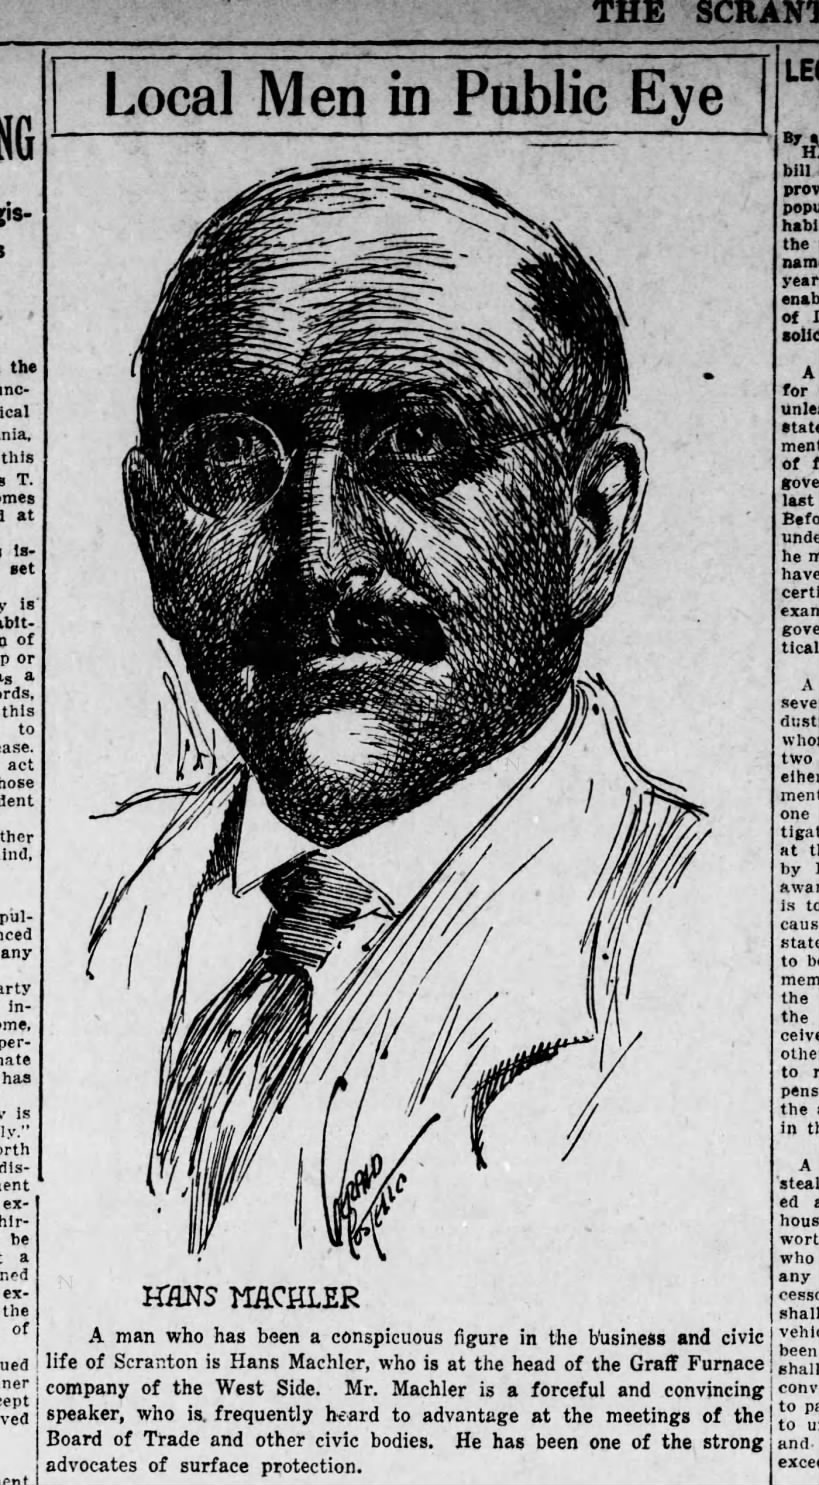 Jerry Costello Portrait of Hans Machler Scr Rep Feb 12 1919 pg 2